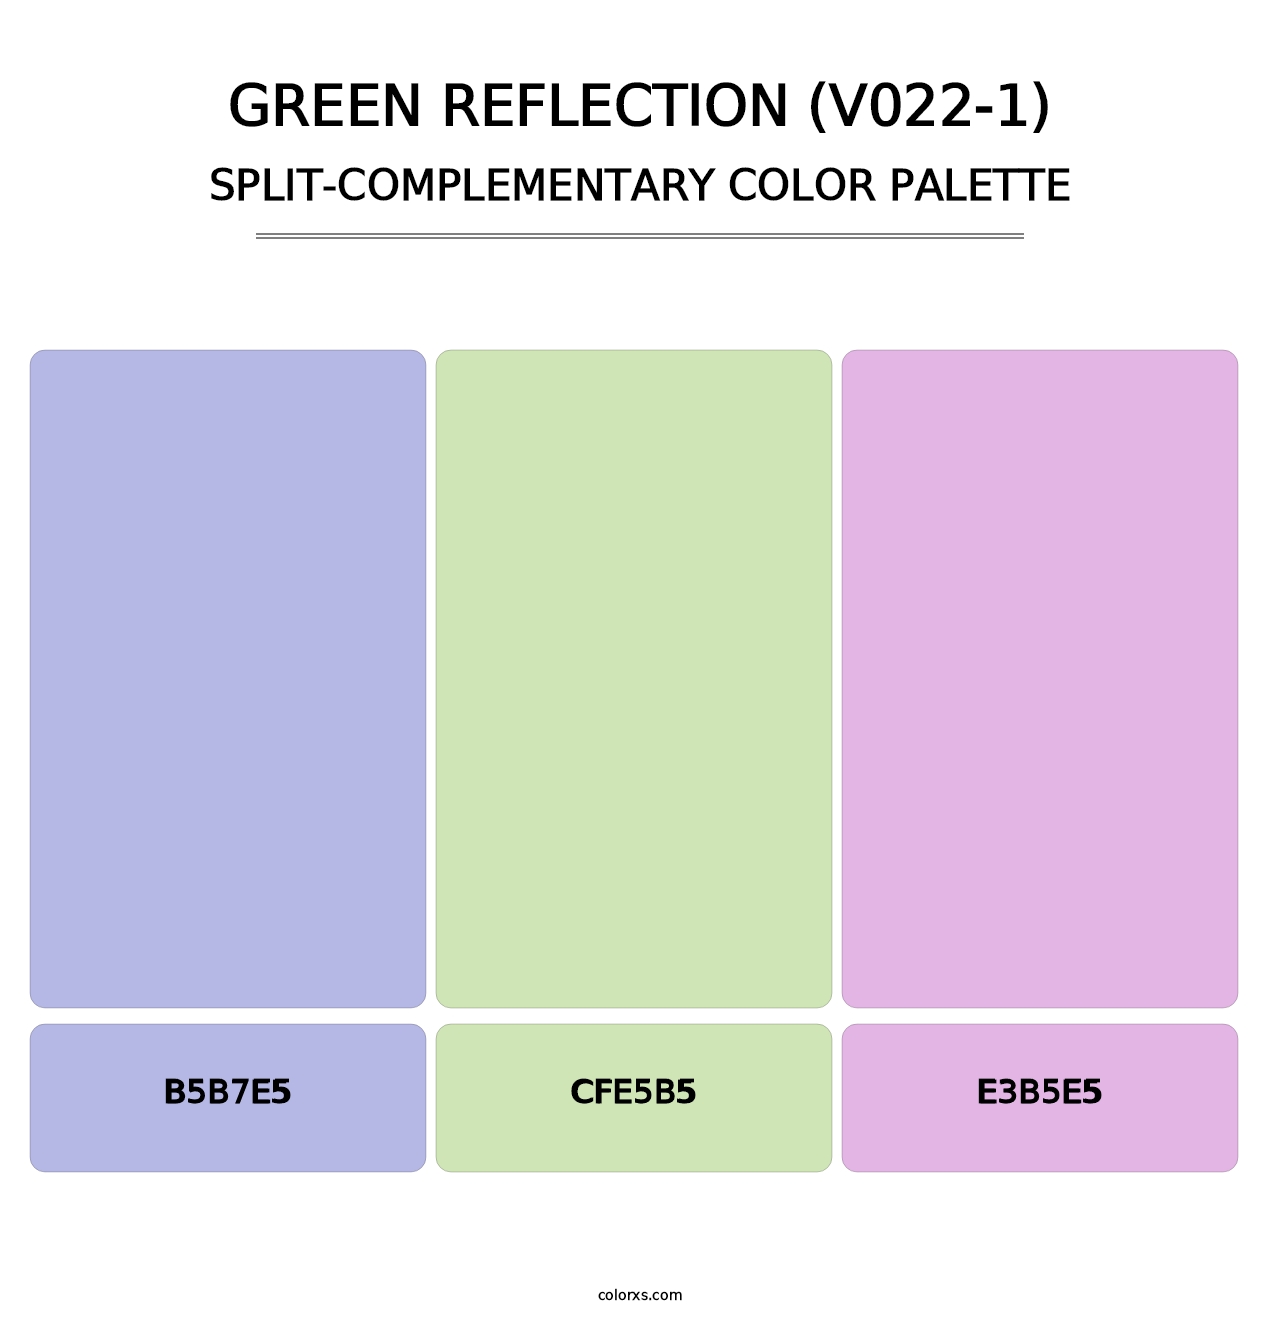 Green Reflection (V022-1) - Split-Complementary Color Palette